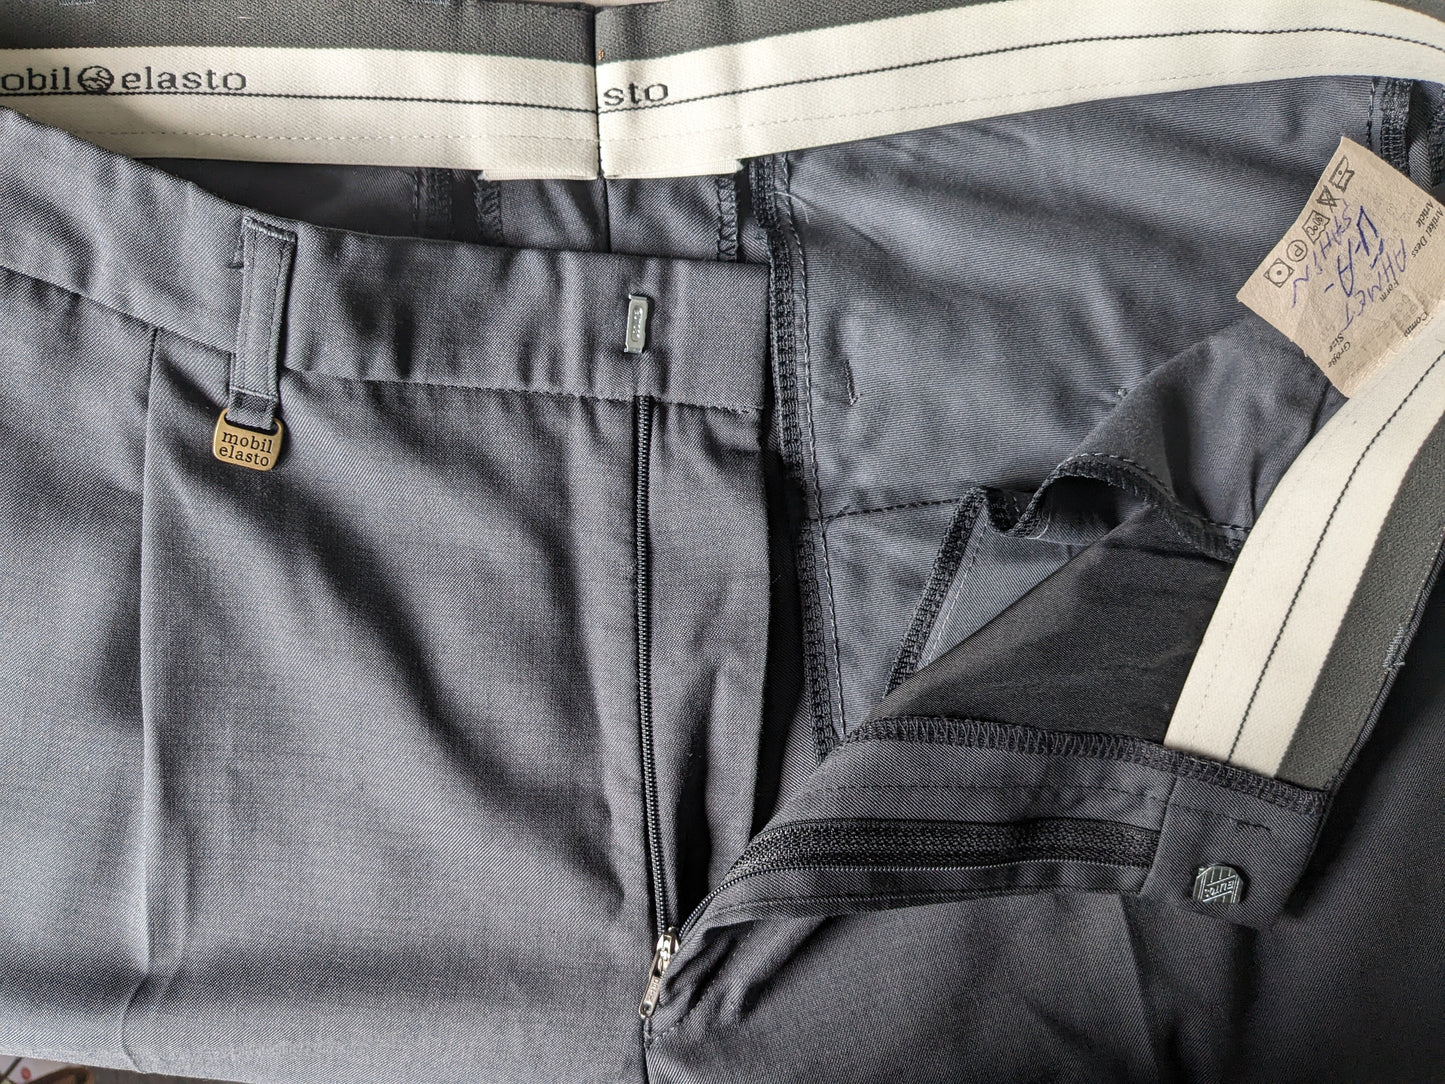 Mobil elasto pantalones con cubierta. Motivo gris oscuro. Tamaño 52 / L.